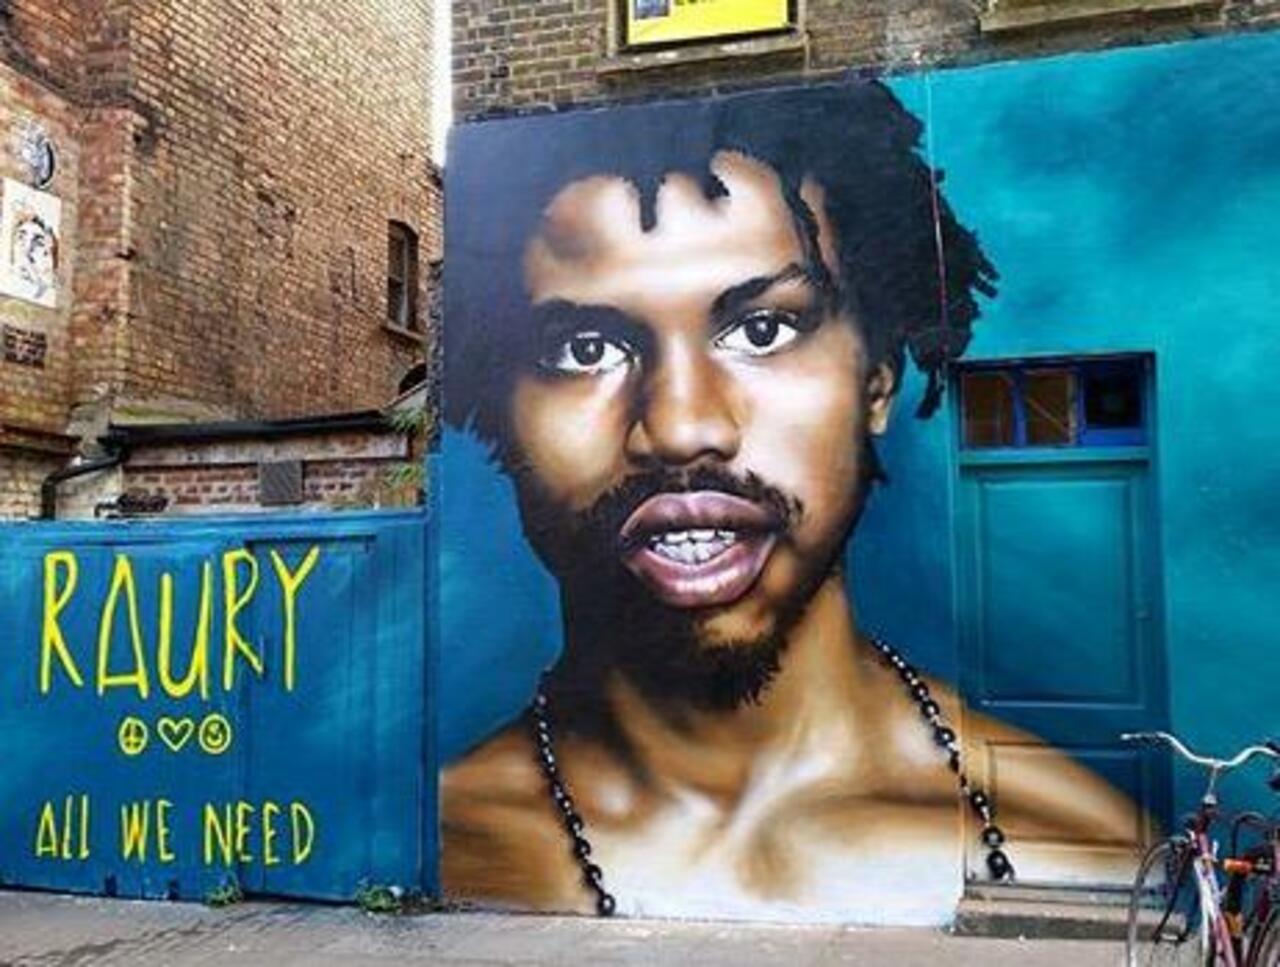 New Street Art of Raury by Olliver Switch in Brick Lane 

#art #graffiti #mural #streetart http://t.co/cX4S2IHSGf